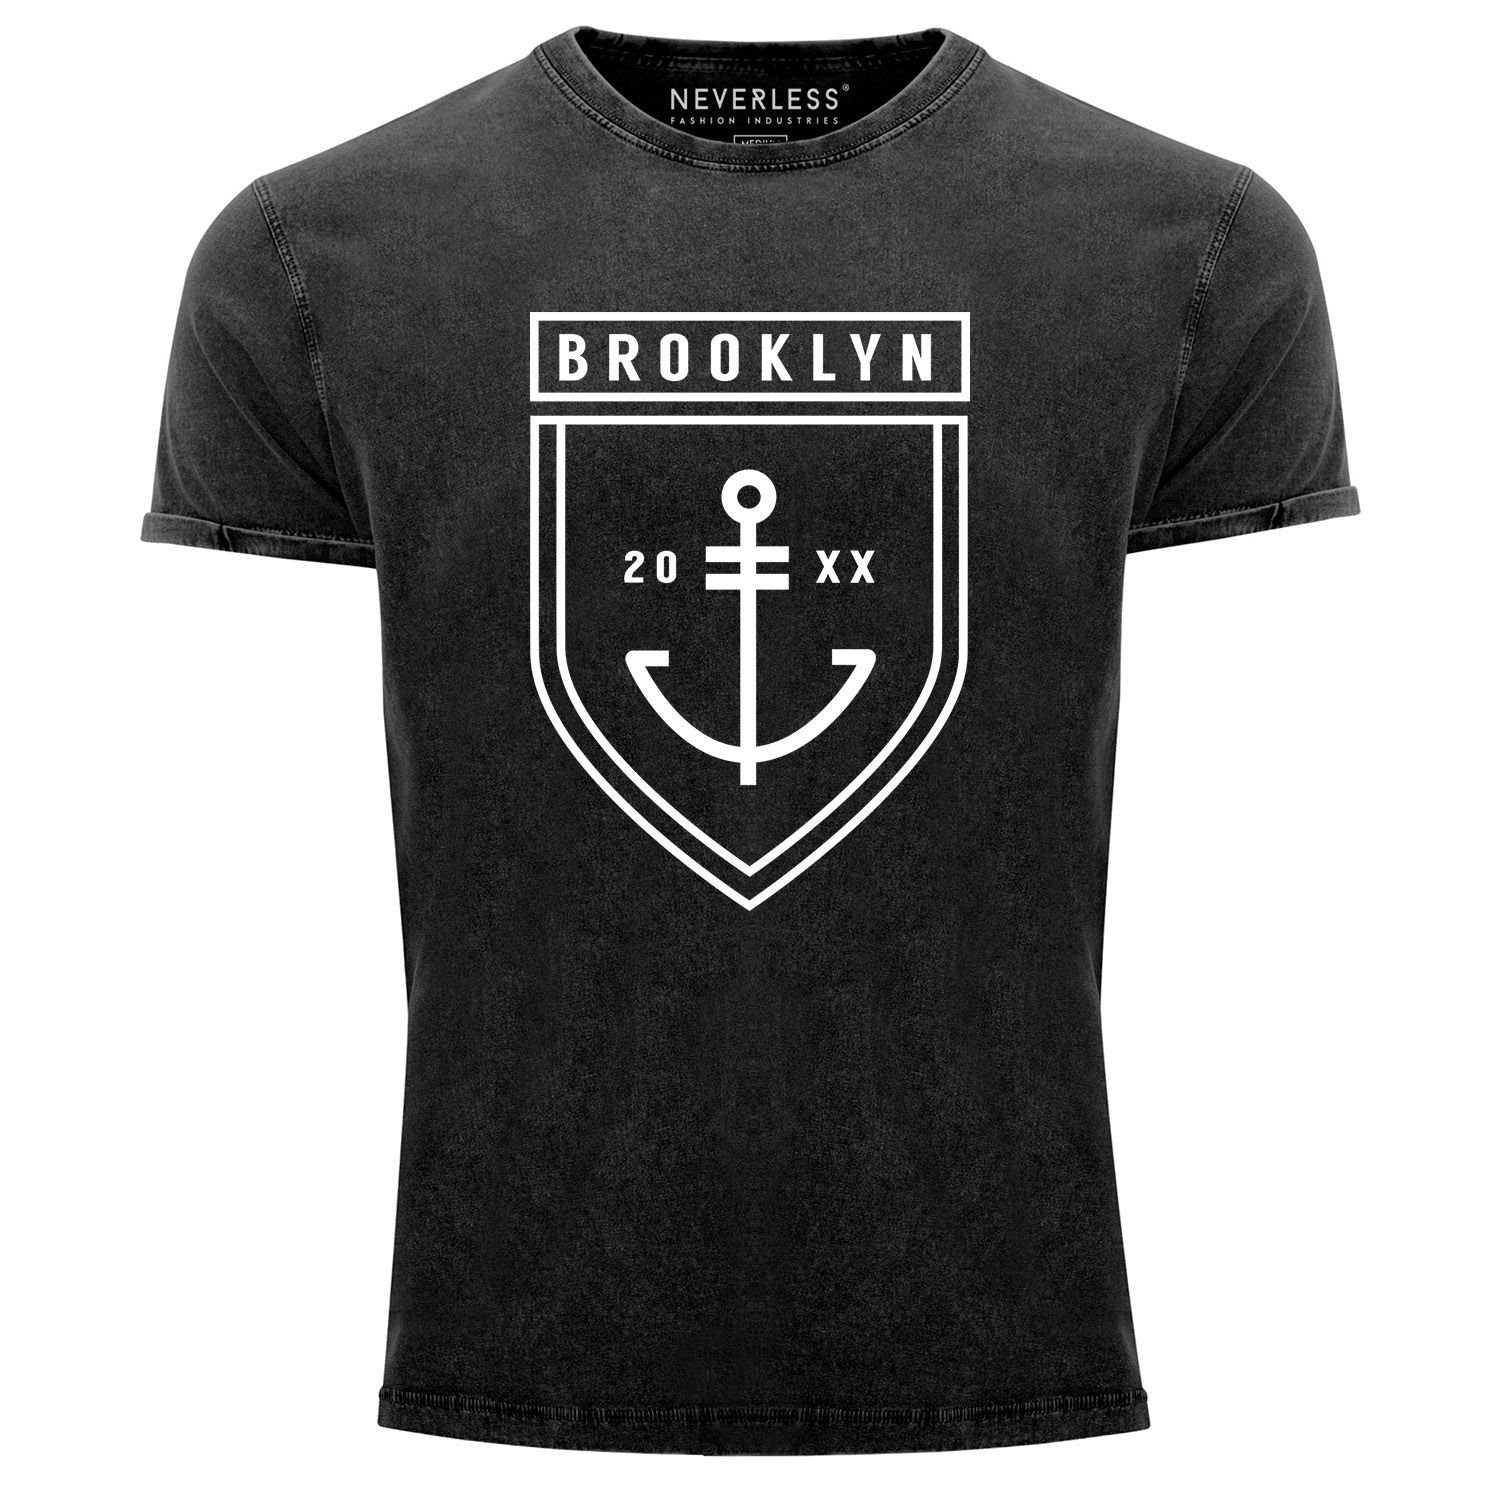 Neverless® Neverless Vintage mit Shirt Slim Used Angesagtes schwarz Print Cooles Anker Brooklyn Aufdruck T-Shirt Herren Look Print-Shirt Fit